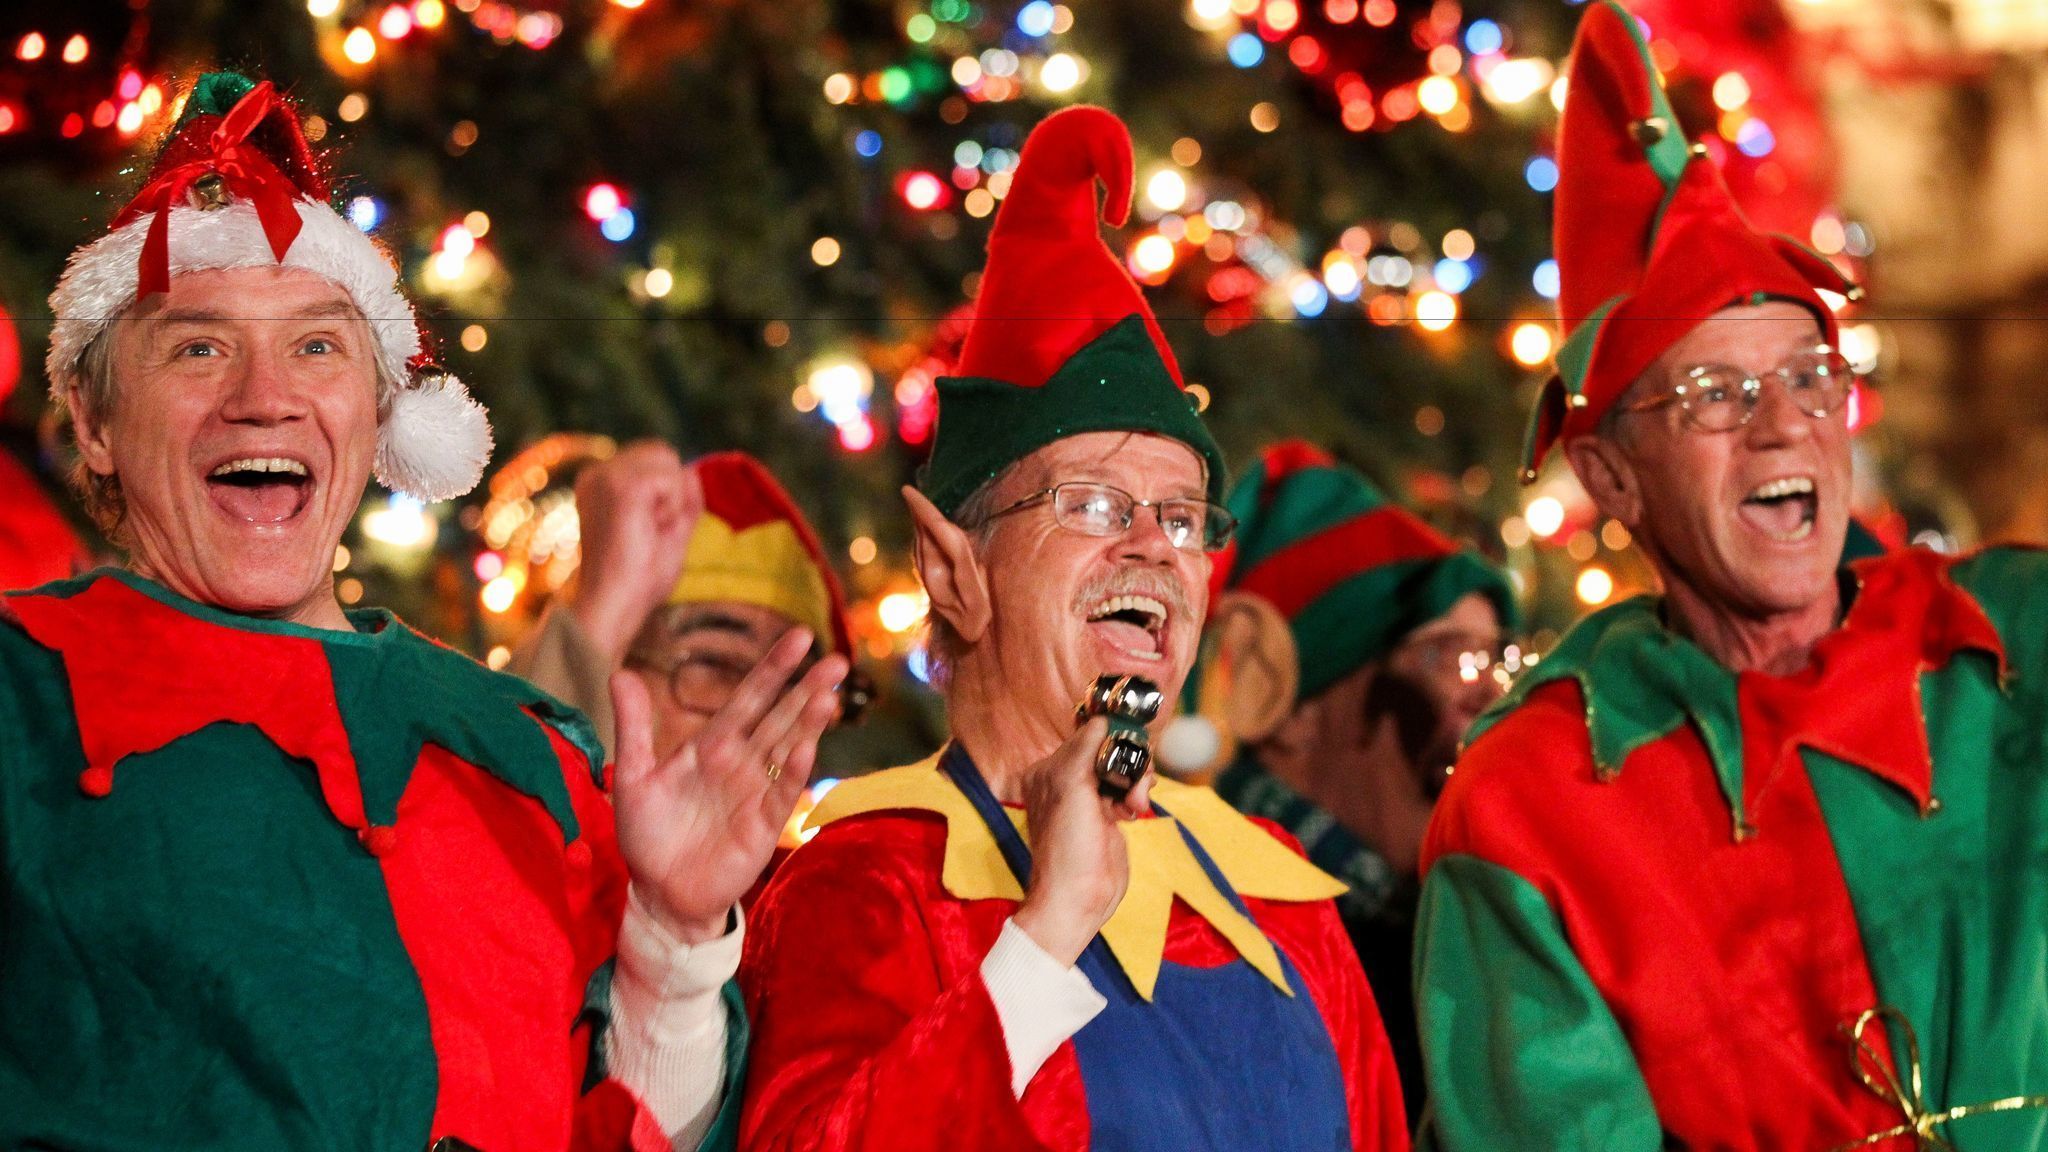 Balboa Park hosts 39th annual December Nights - The San Diego Union-Tribune